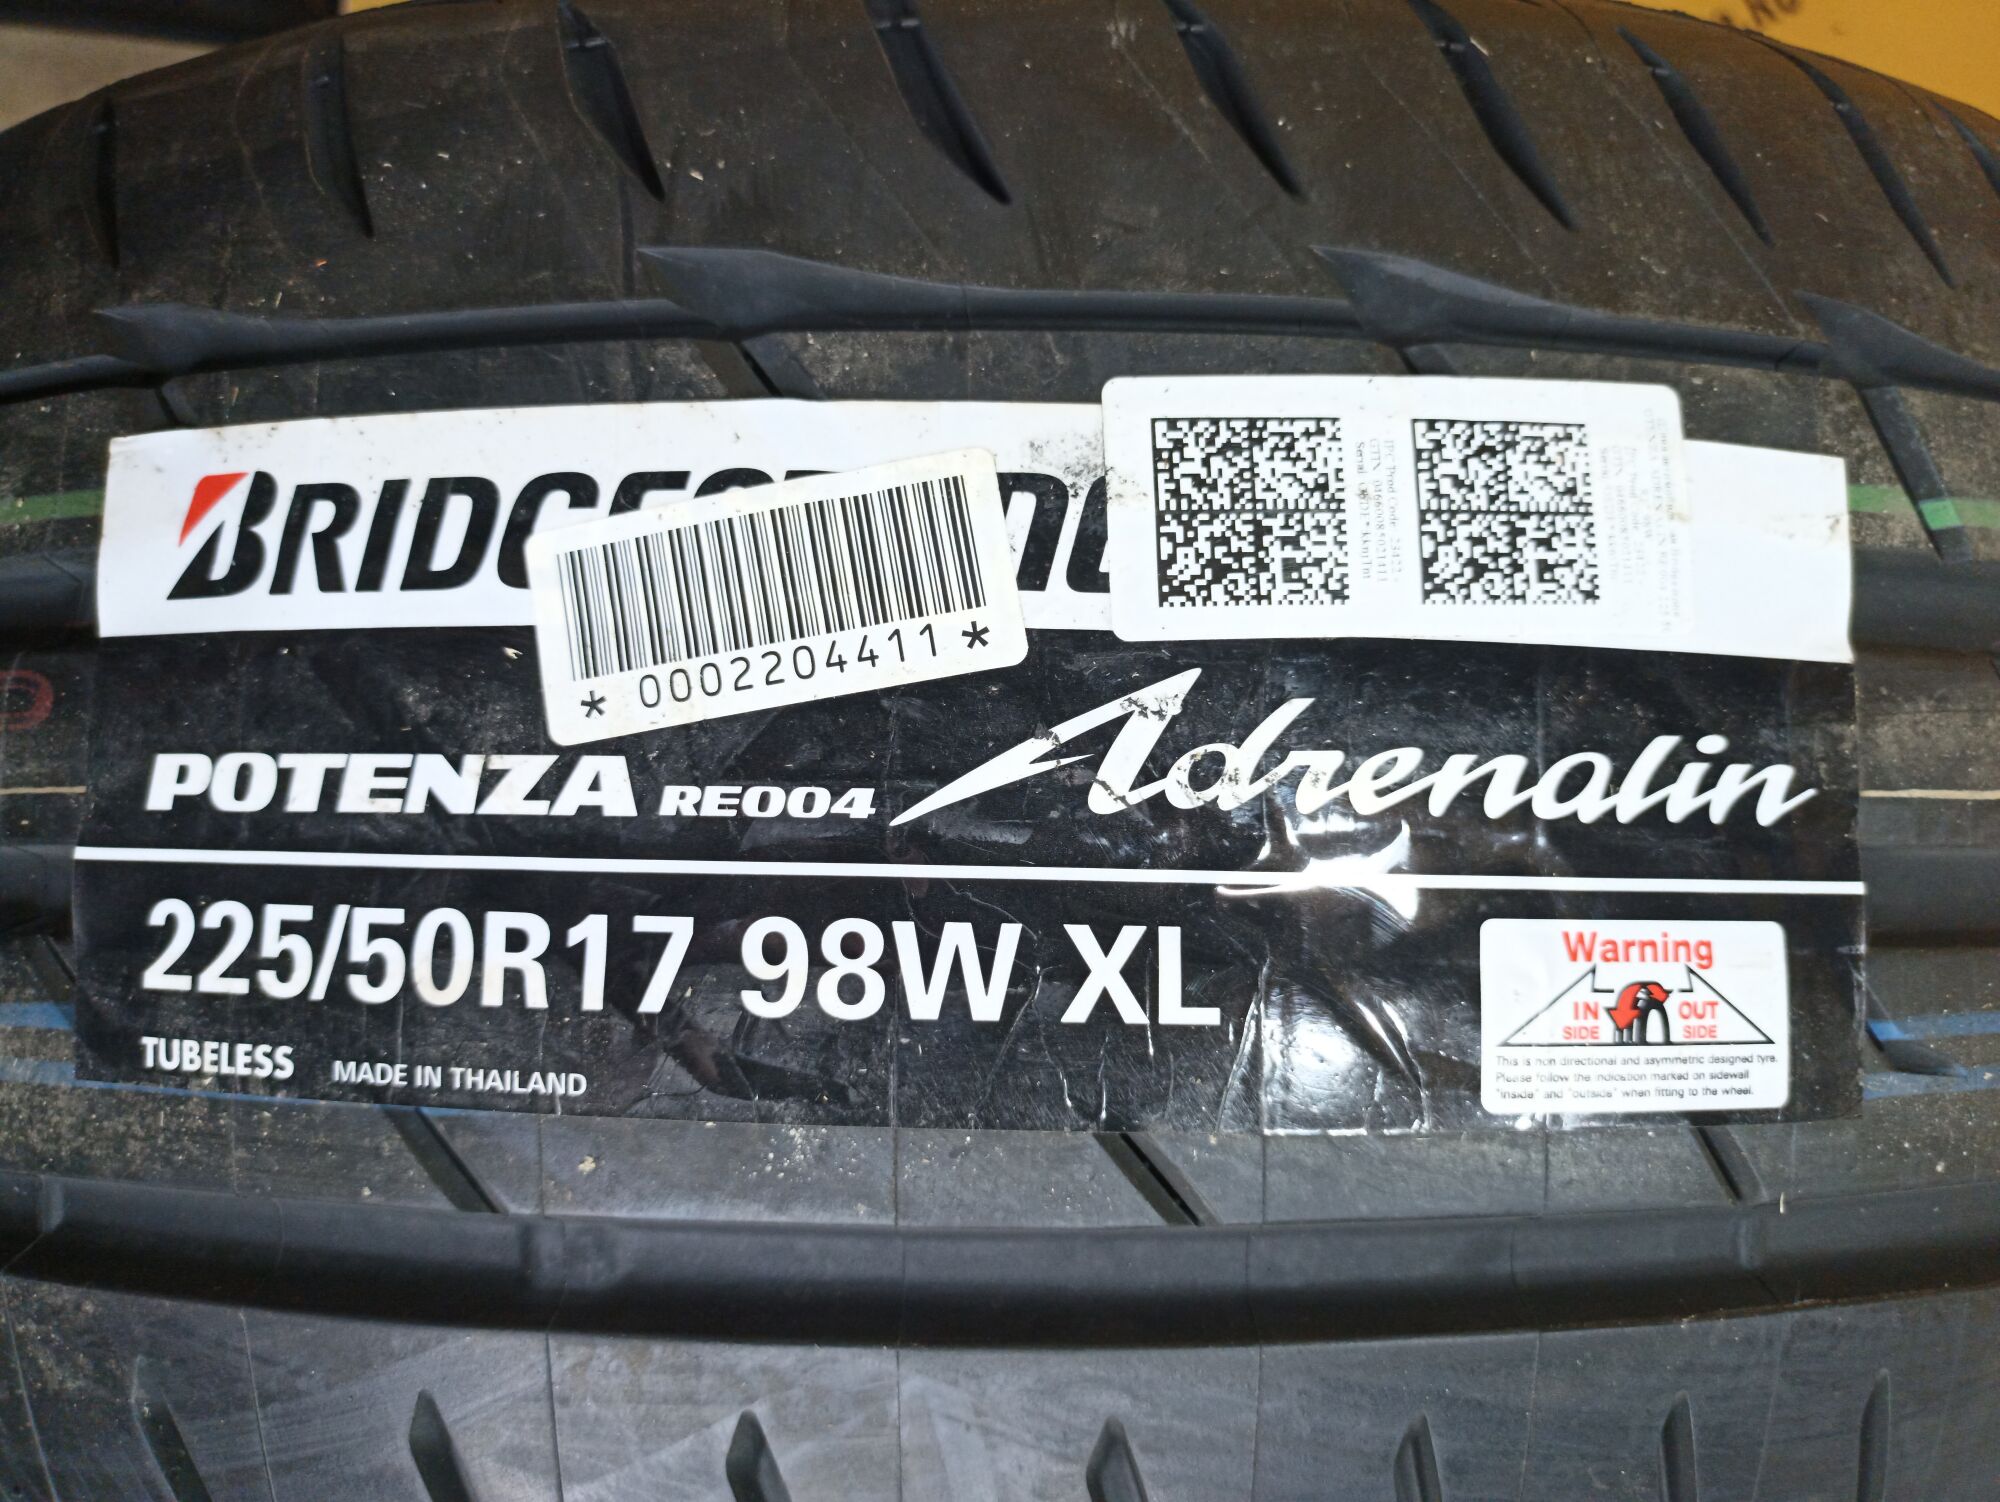 Looking to Buy New Tires. Top 10 Tips for Bridgestone 225 60r17